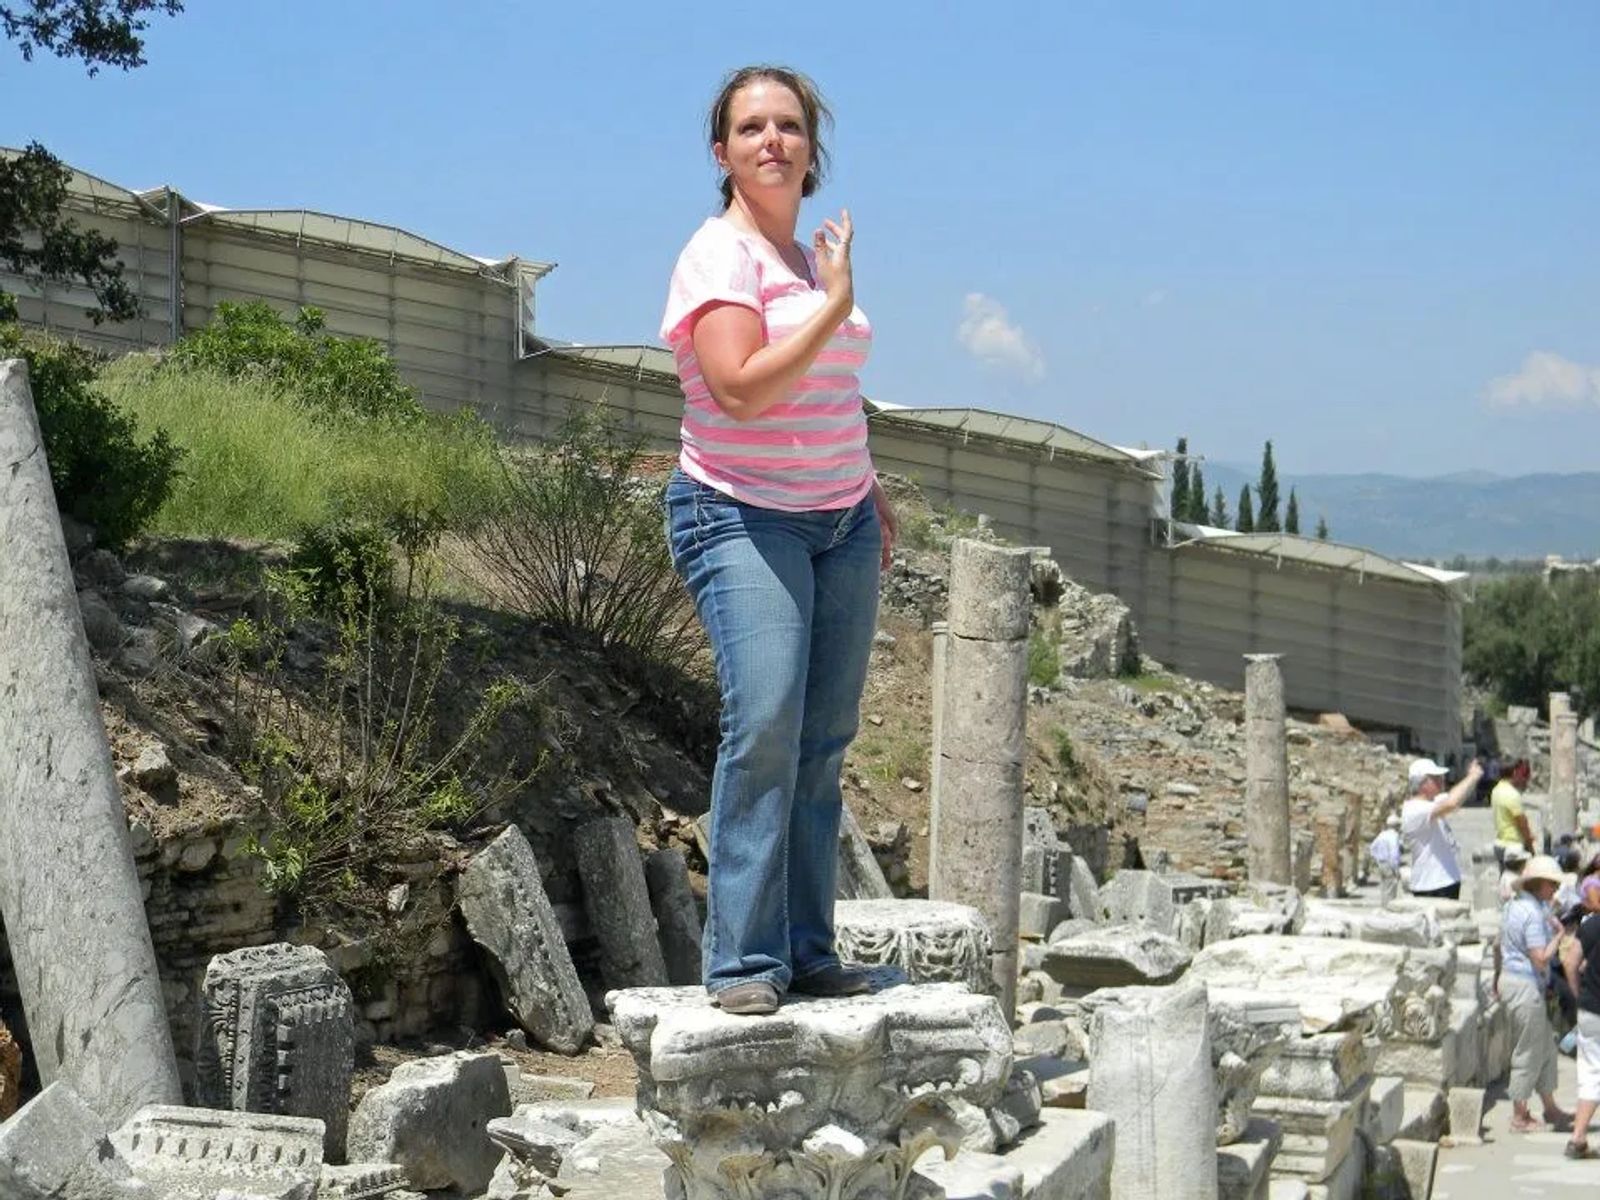 Visit Ephesus on a shore excursion - Culture Trekking - #Ephesus #EphesusTurkey #HistoryofEphesus